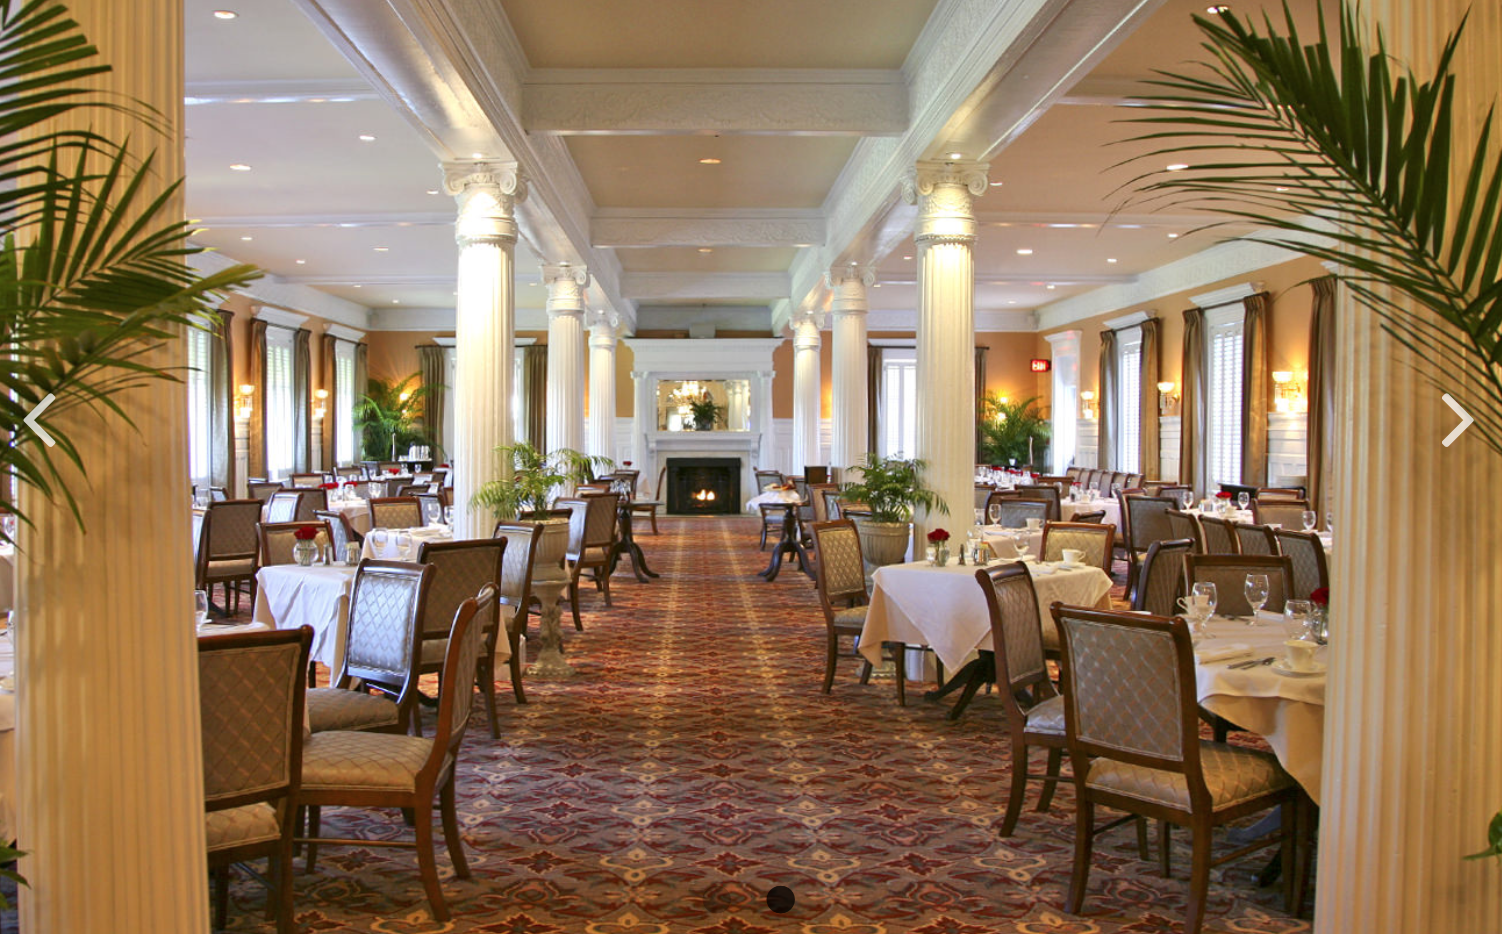 Jekyll Island Club Resort: Best Hotel in Georgia